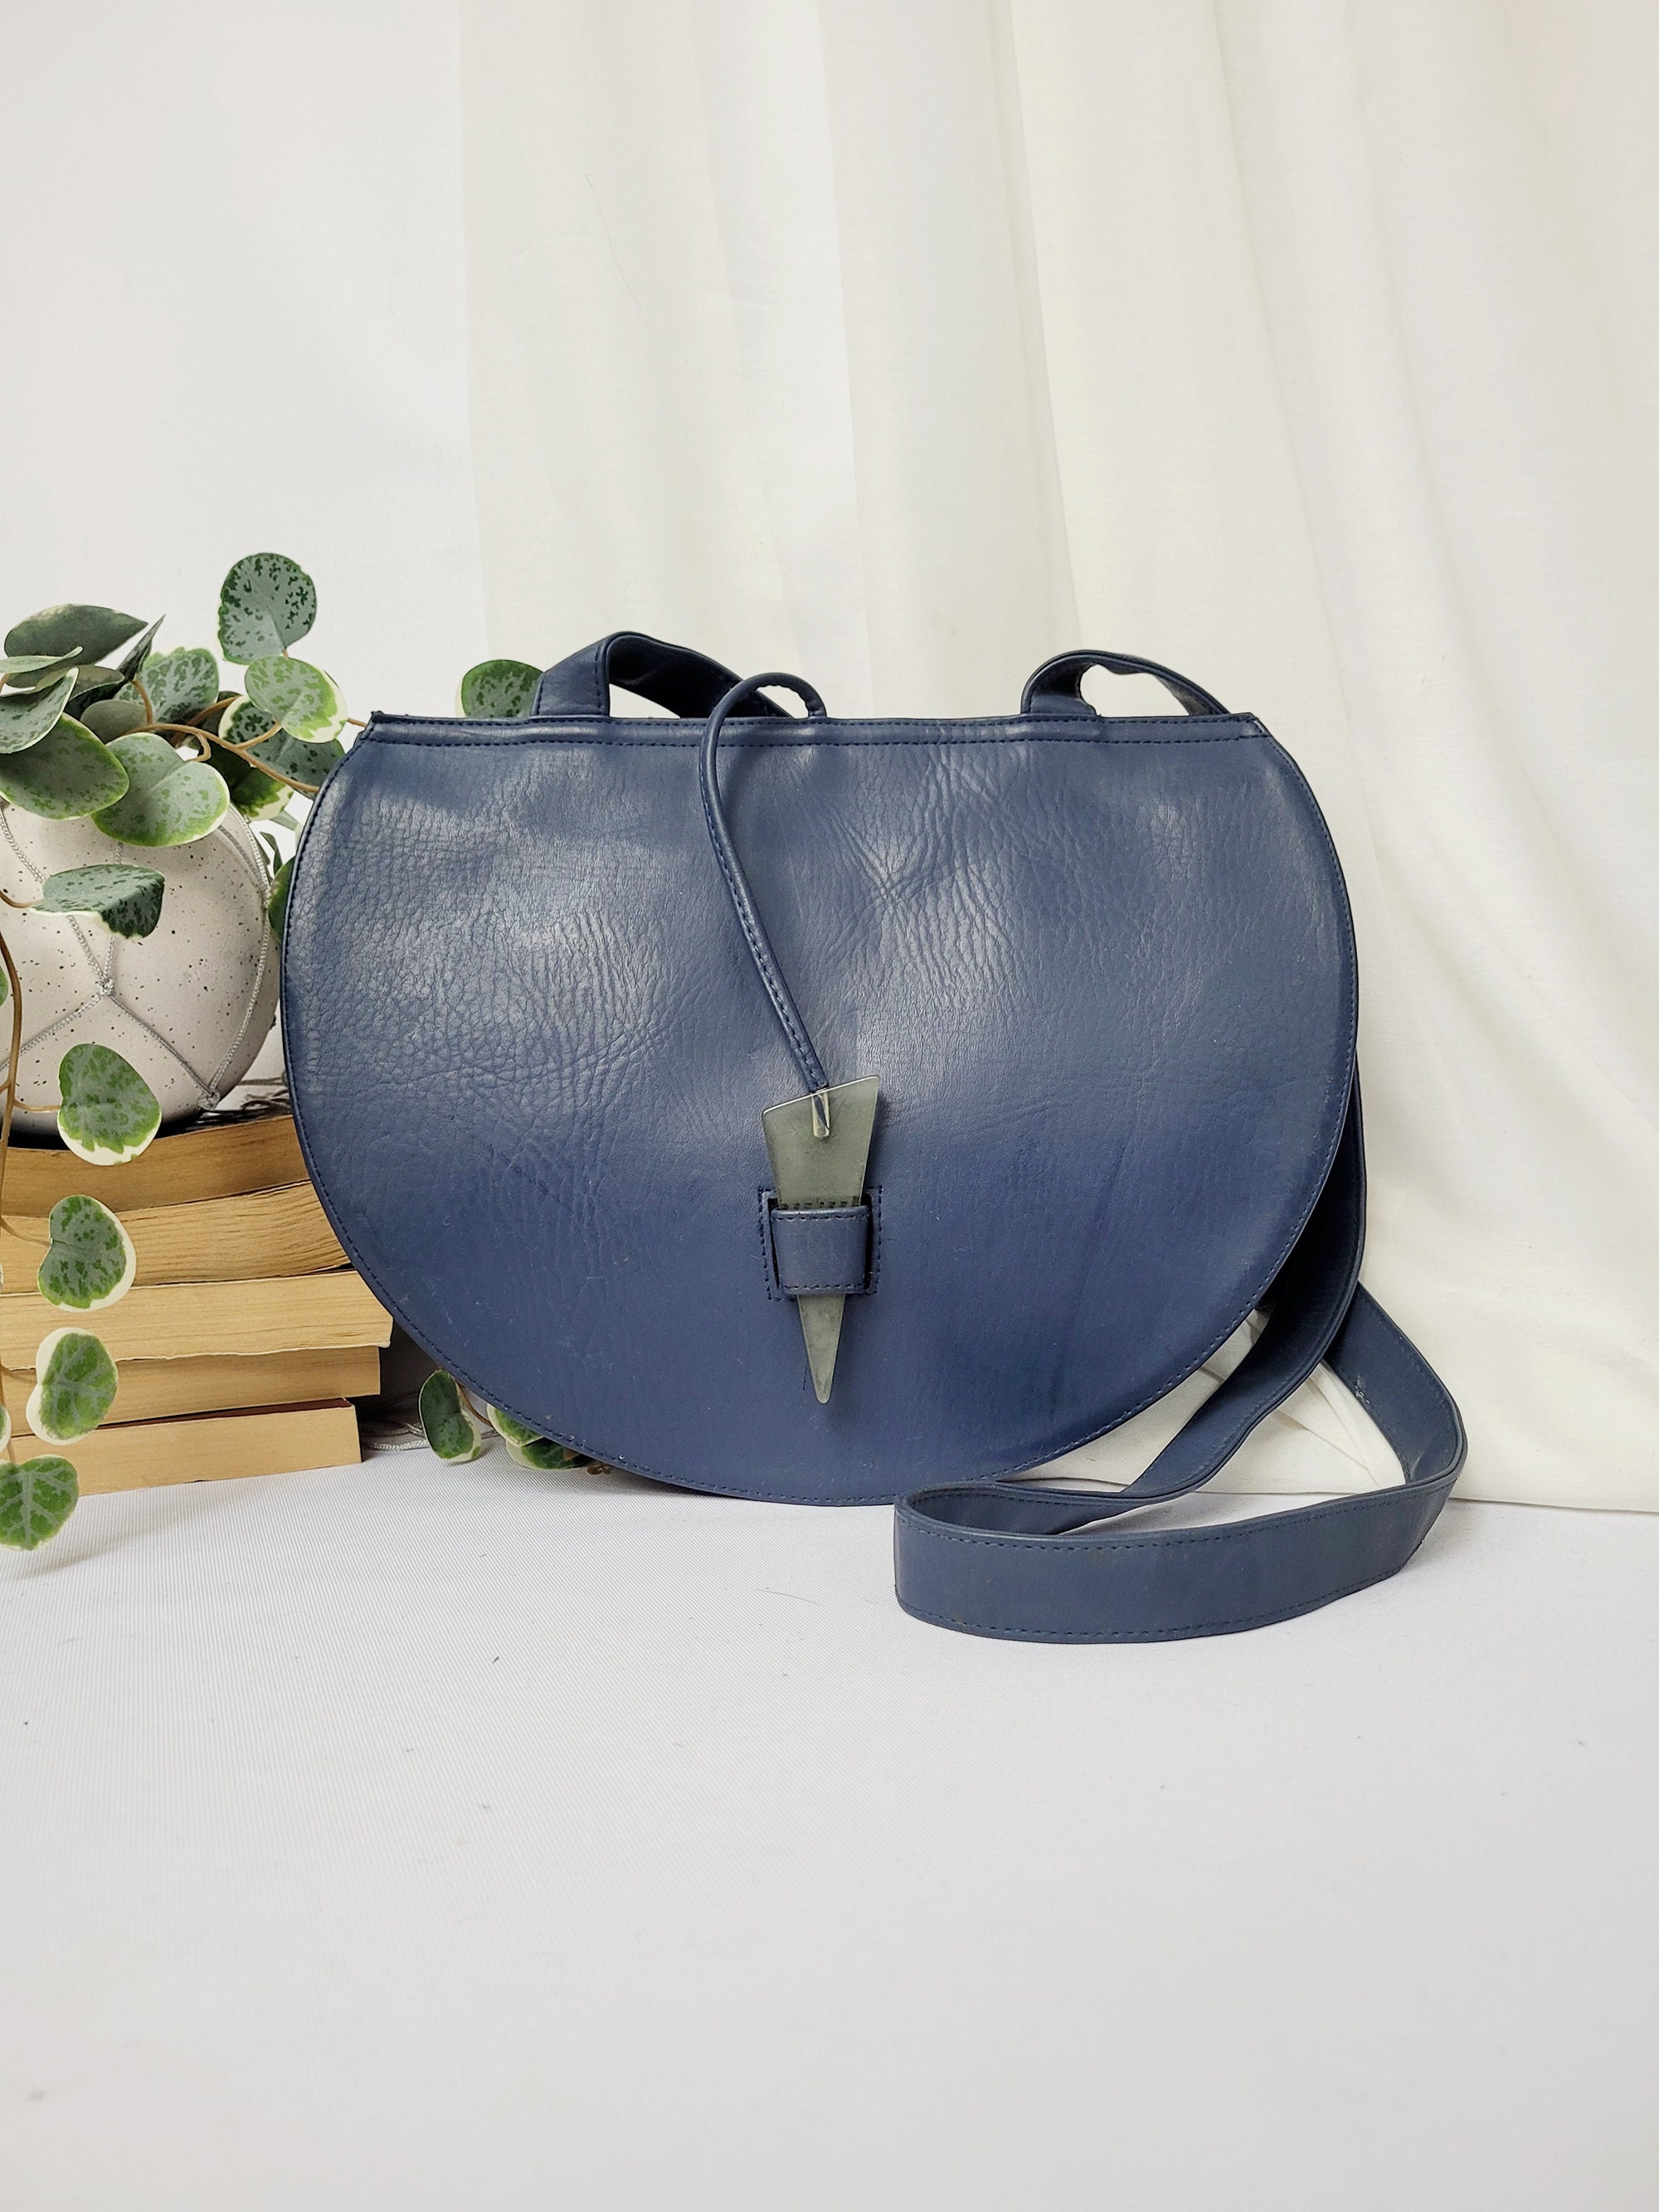 Balenciaga Bag / Vintage Round Purse / 80s Round Handbag /